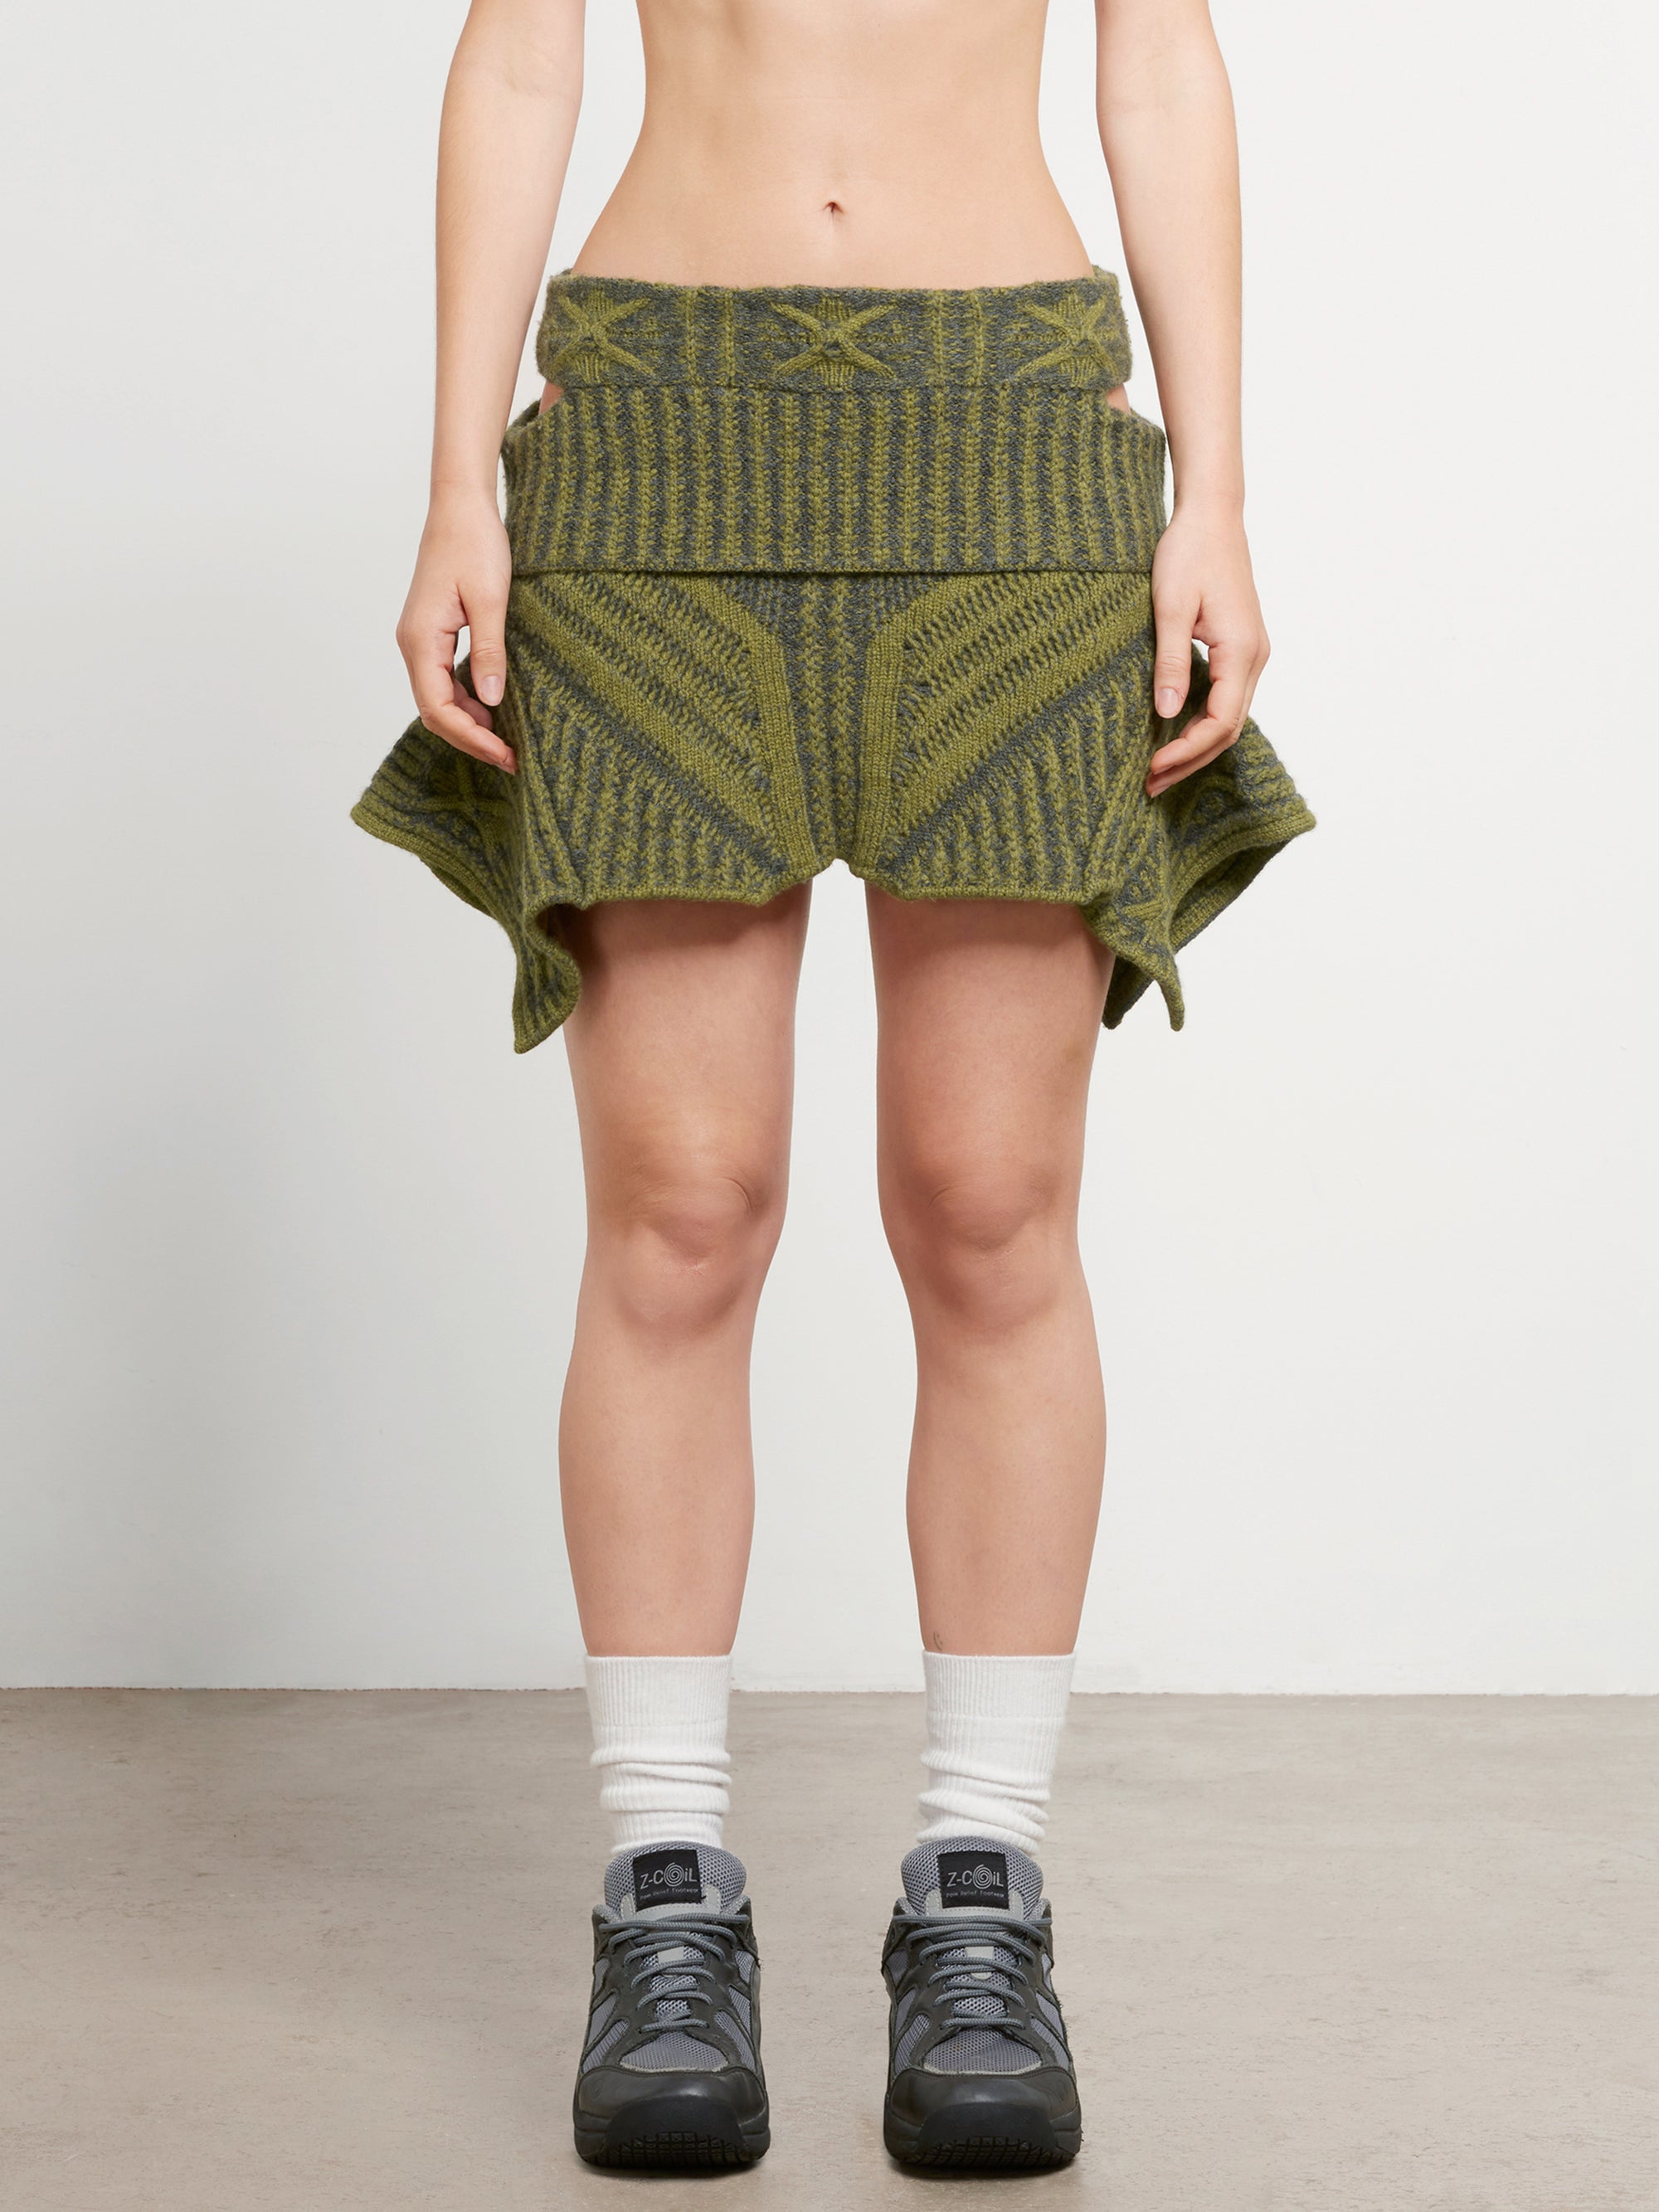 Paolina Russo - Women’s Warrior Mini Skirt - (Khaki) view 1